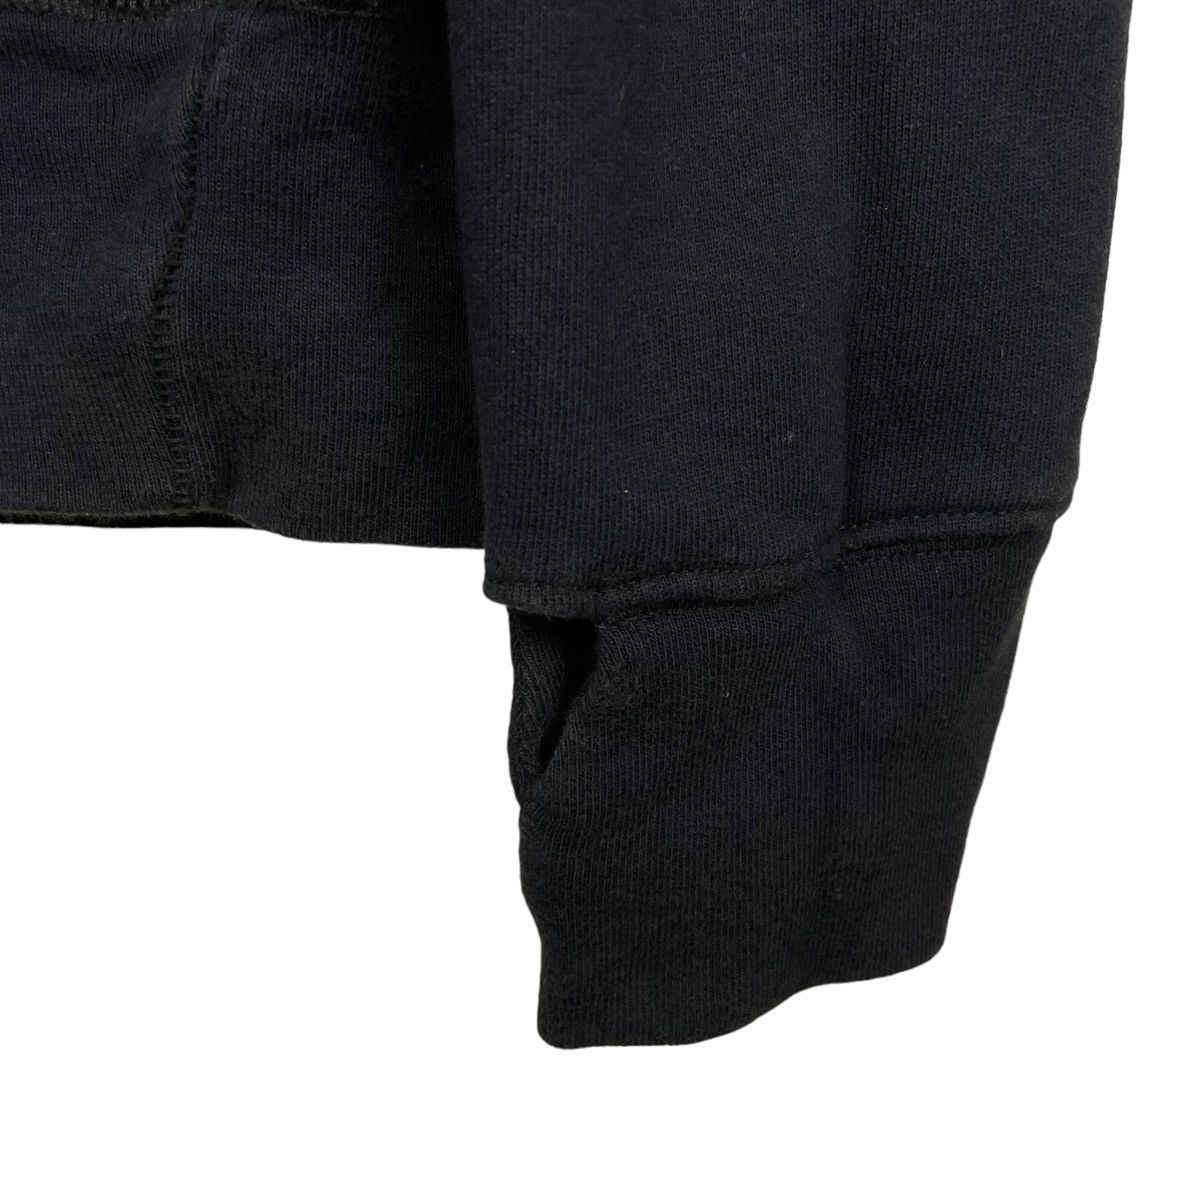 Evisu Evisu Zip-up Hoodie Sweatshirt Vintage Color Navy Size XL Size US XL / EU 56 / 4 - 4 Thumbnail